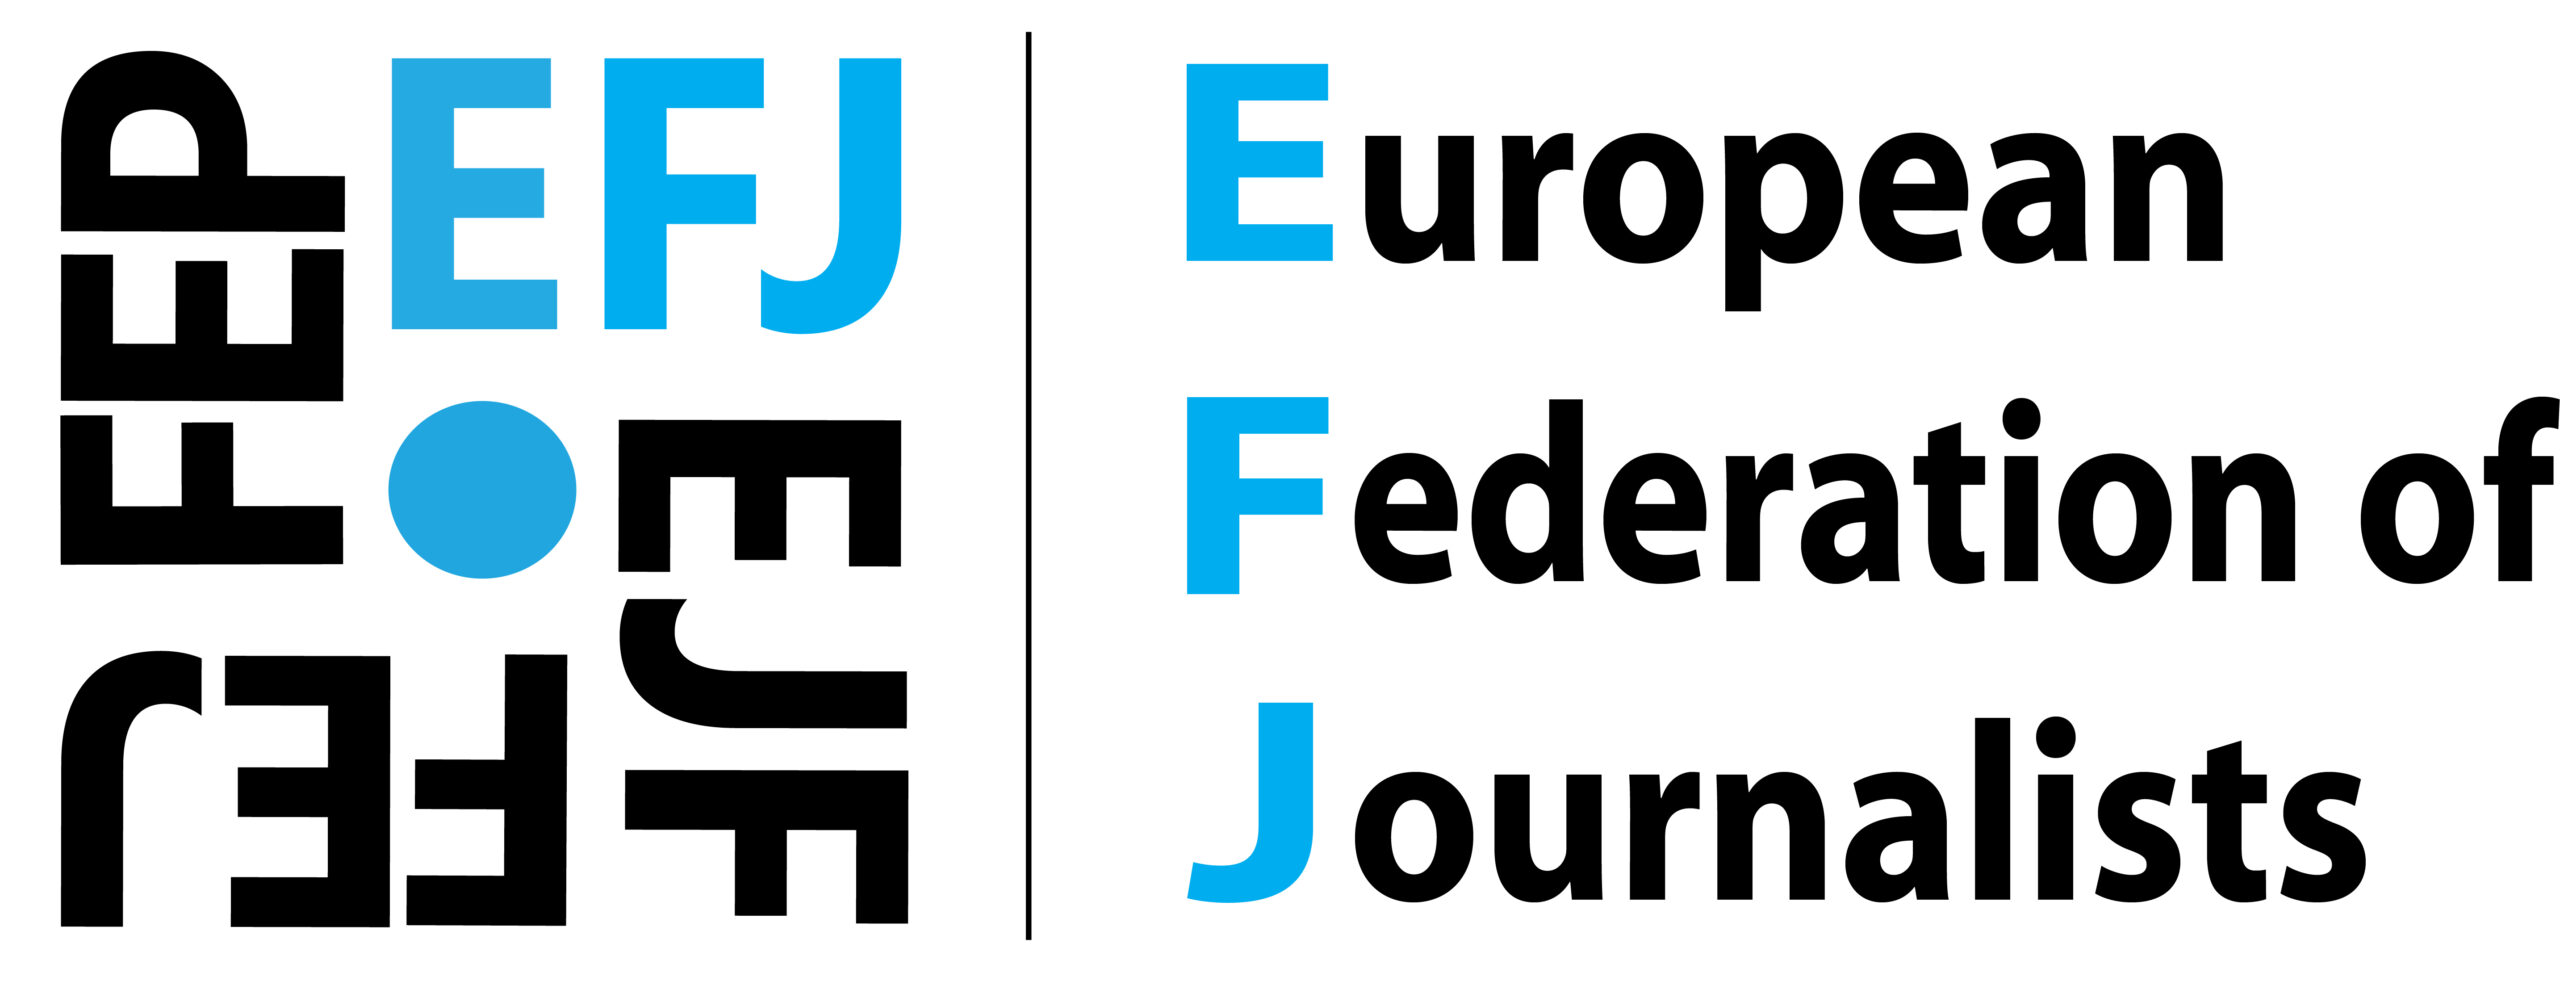 LOGO-European Federation of Journalists